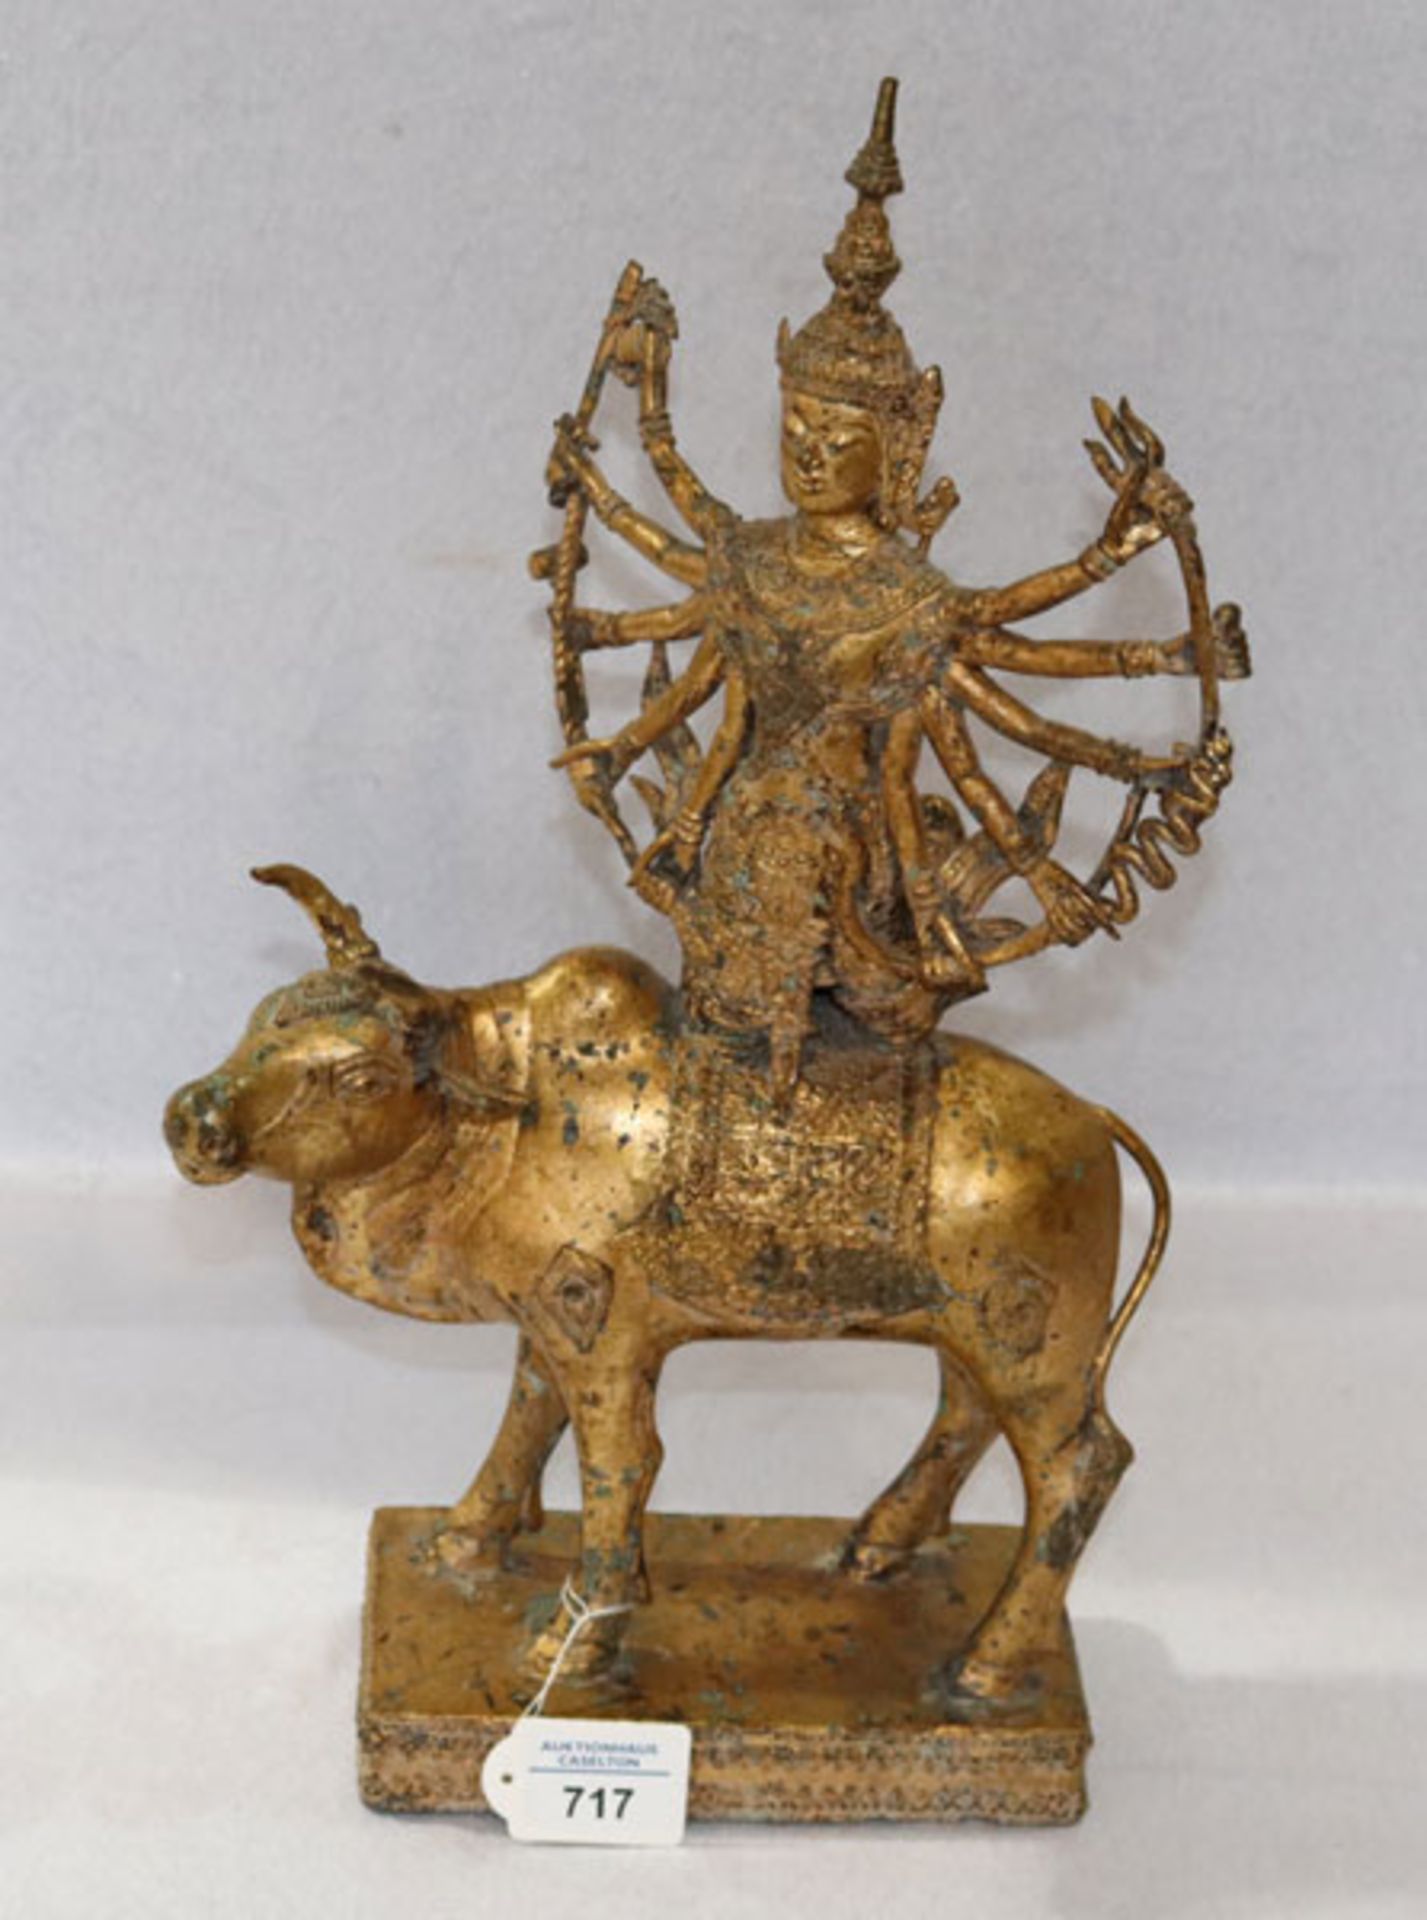 Figurenskulptur, Metallguß 'Shiva auf Stier', Thailand, Vergoldung teils berieben, H 45 cm, B 25 cm,